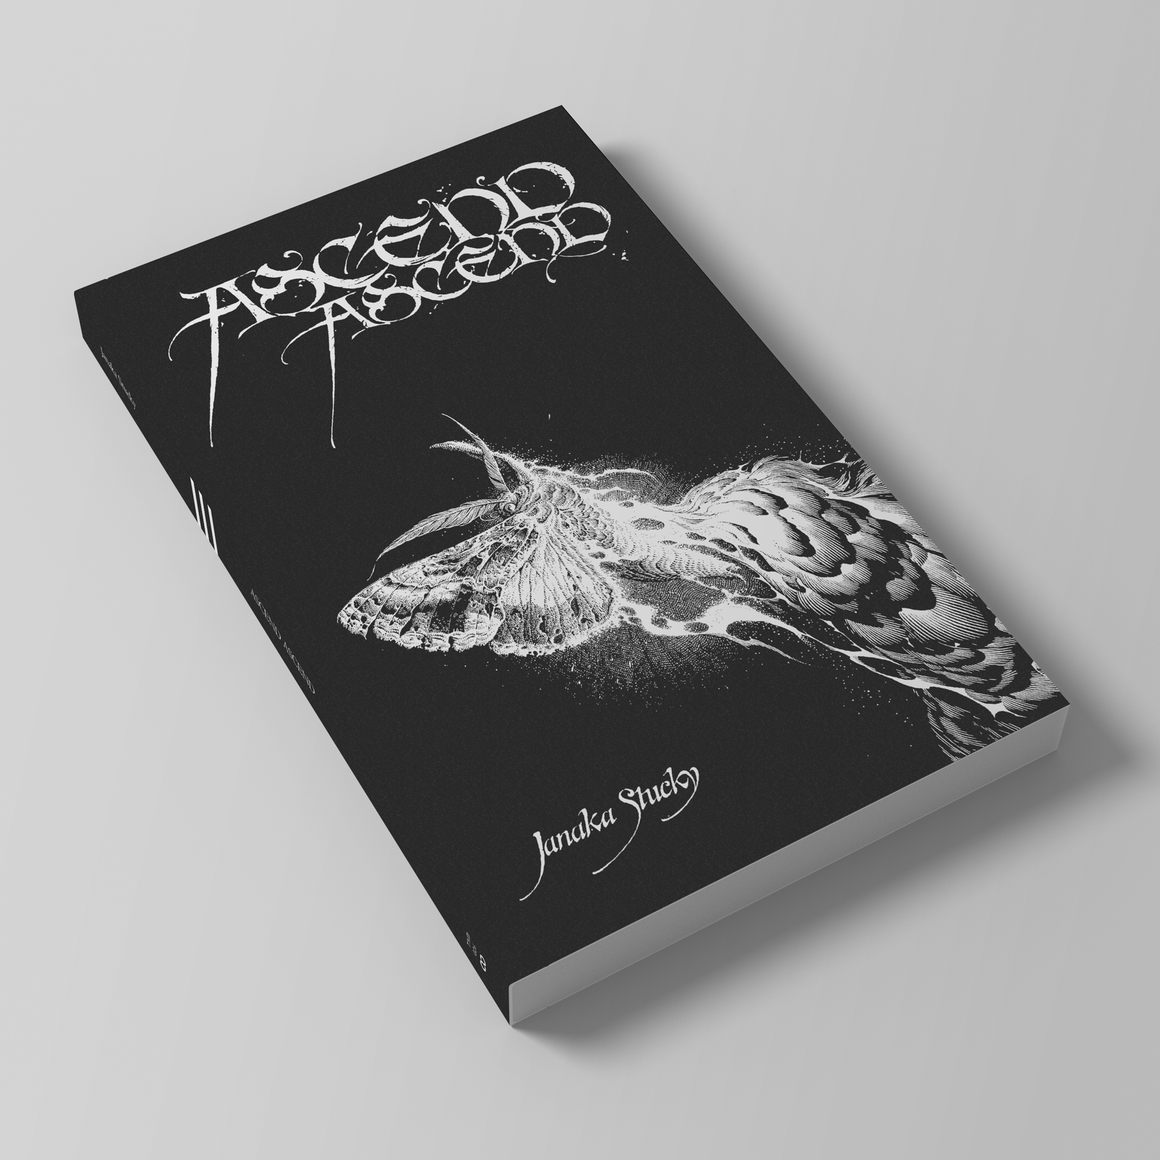 Trade edition of Ascend Ascend.